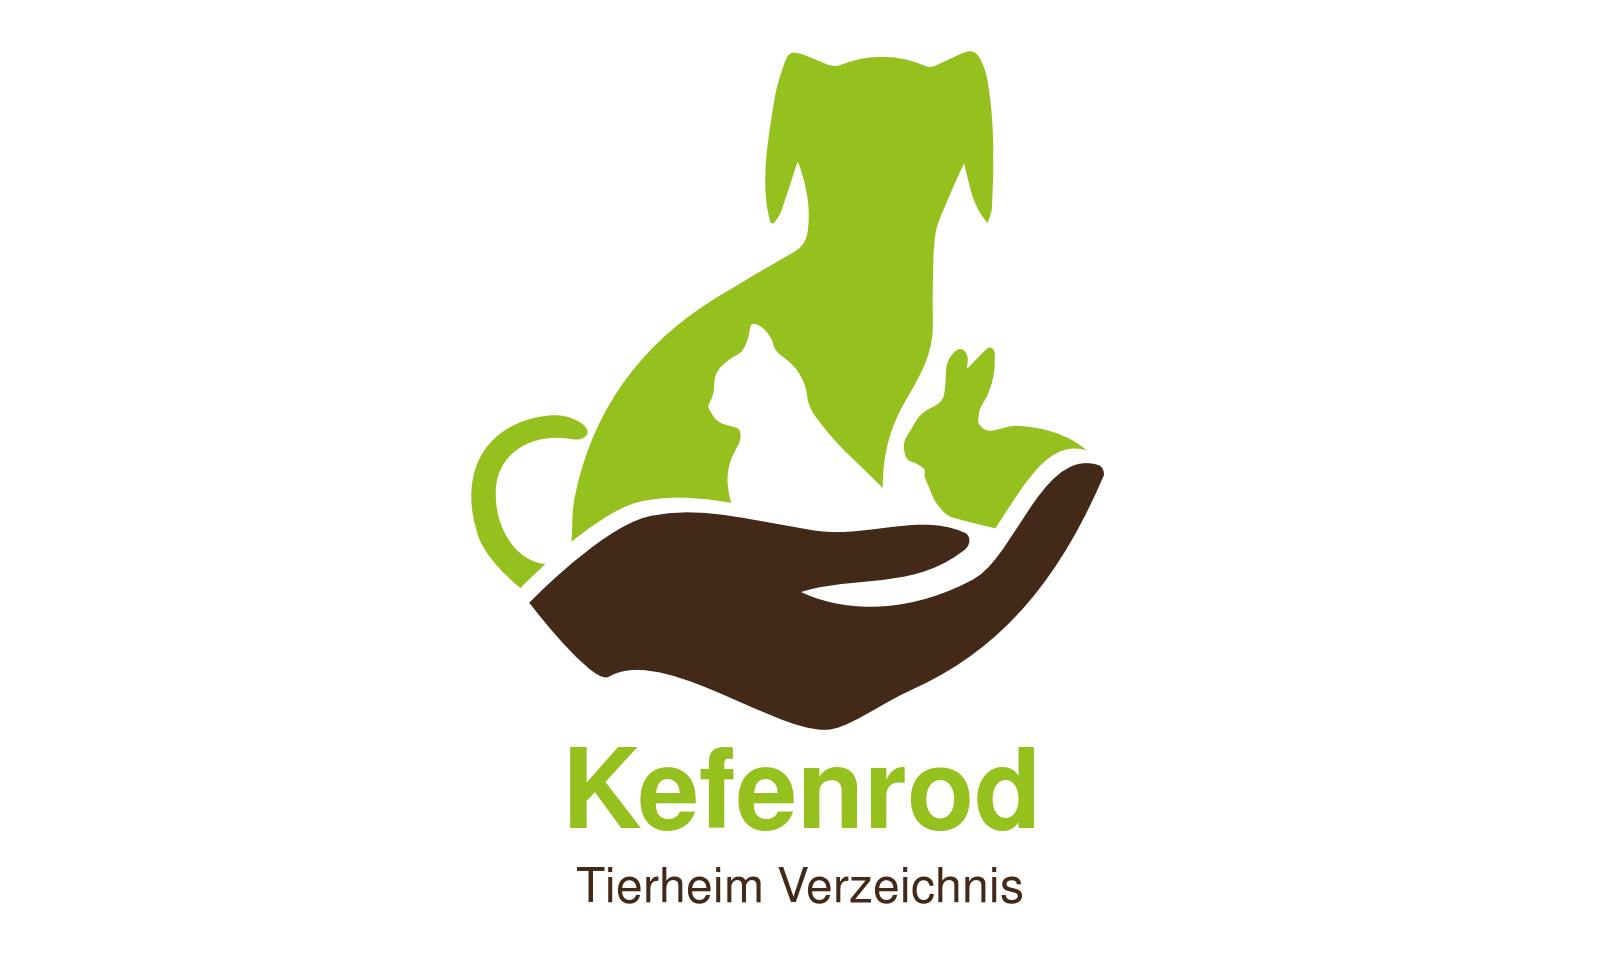 Tierheim Kefenrod